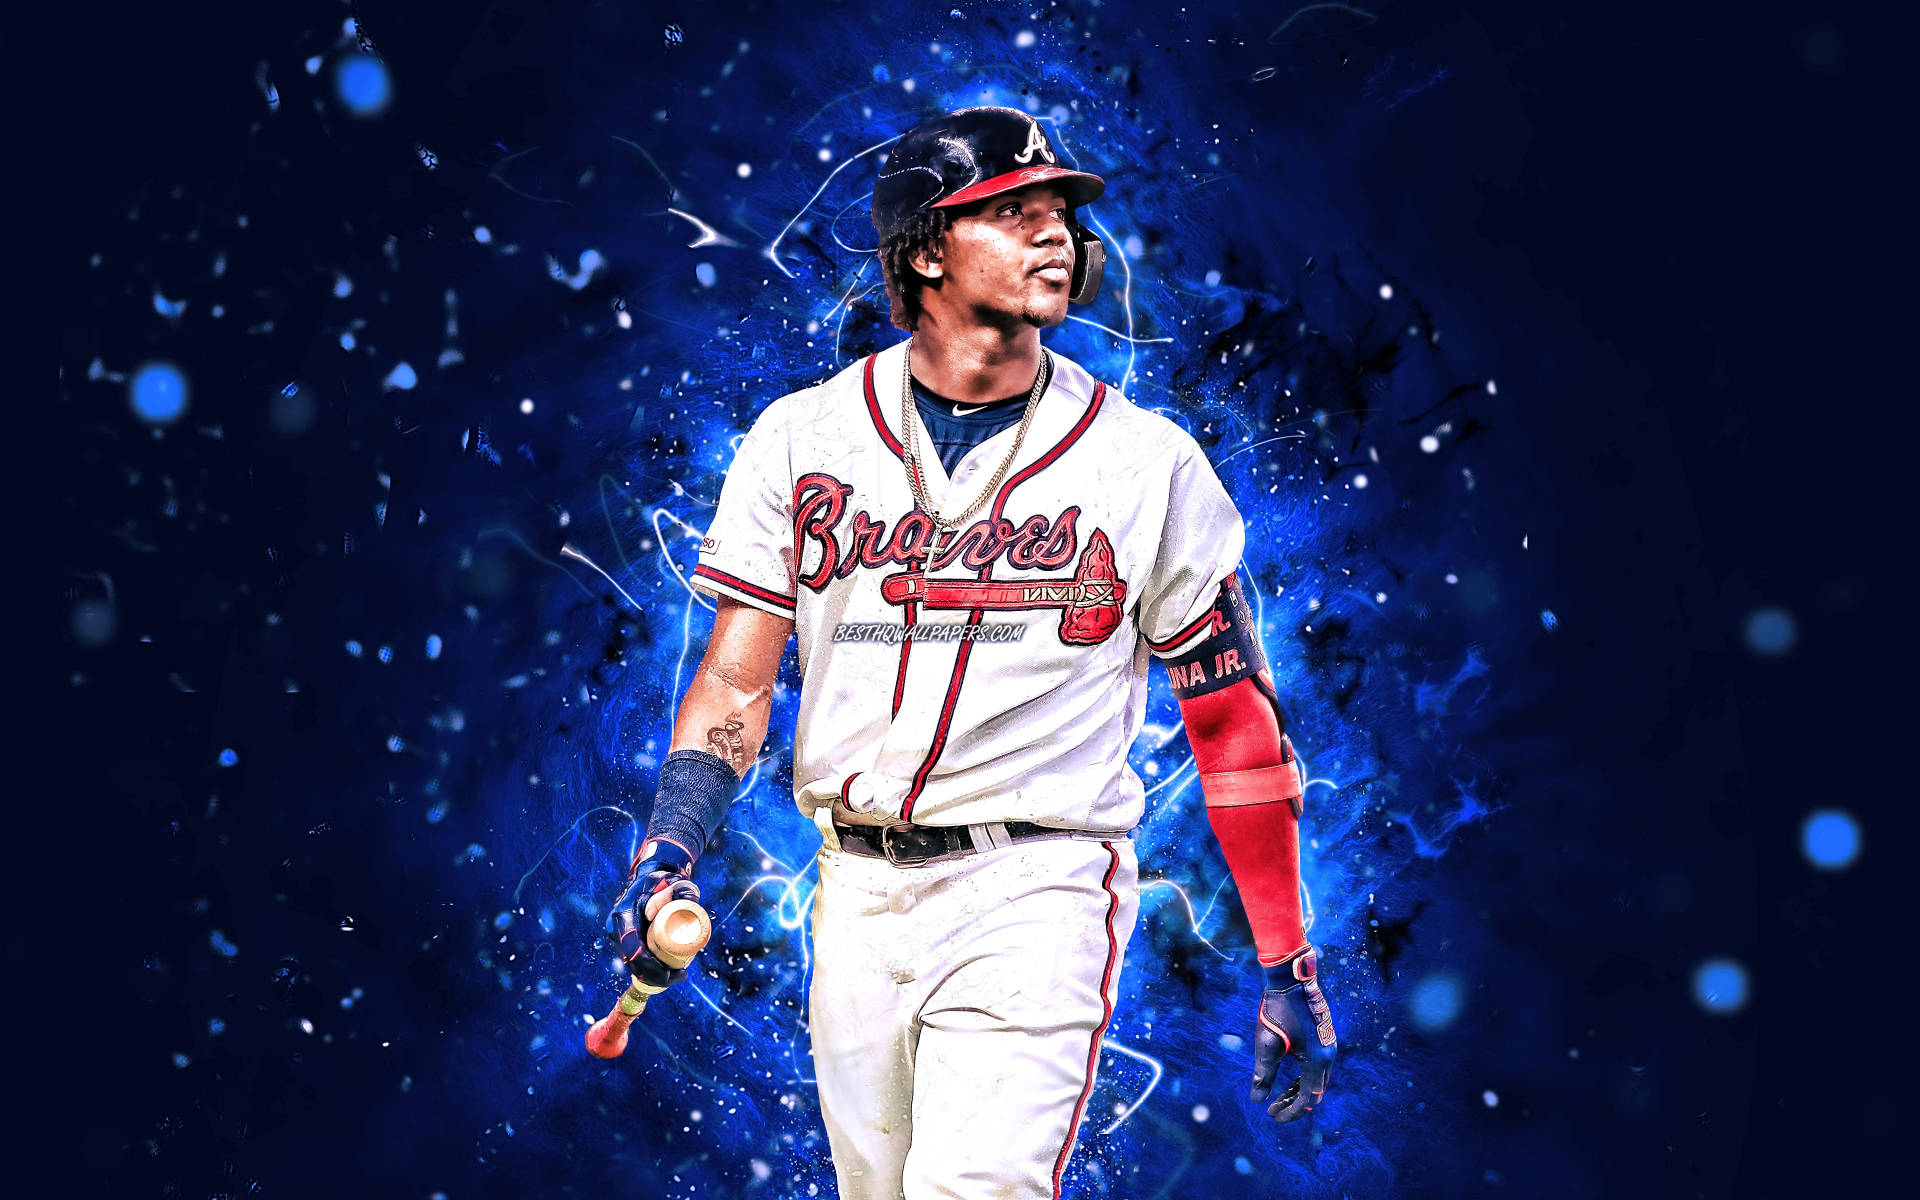 Atlanta Braves Player Digital Art Wallpaper